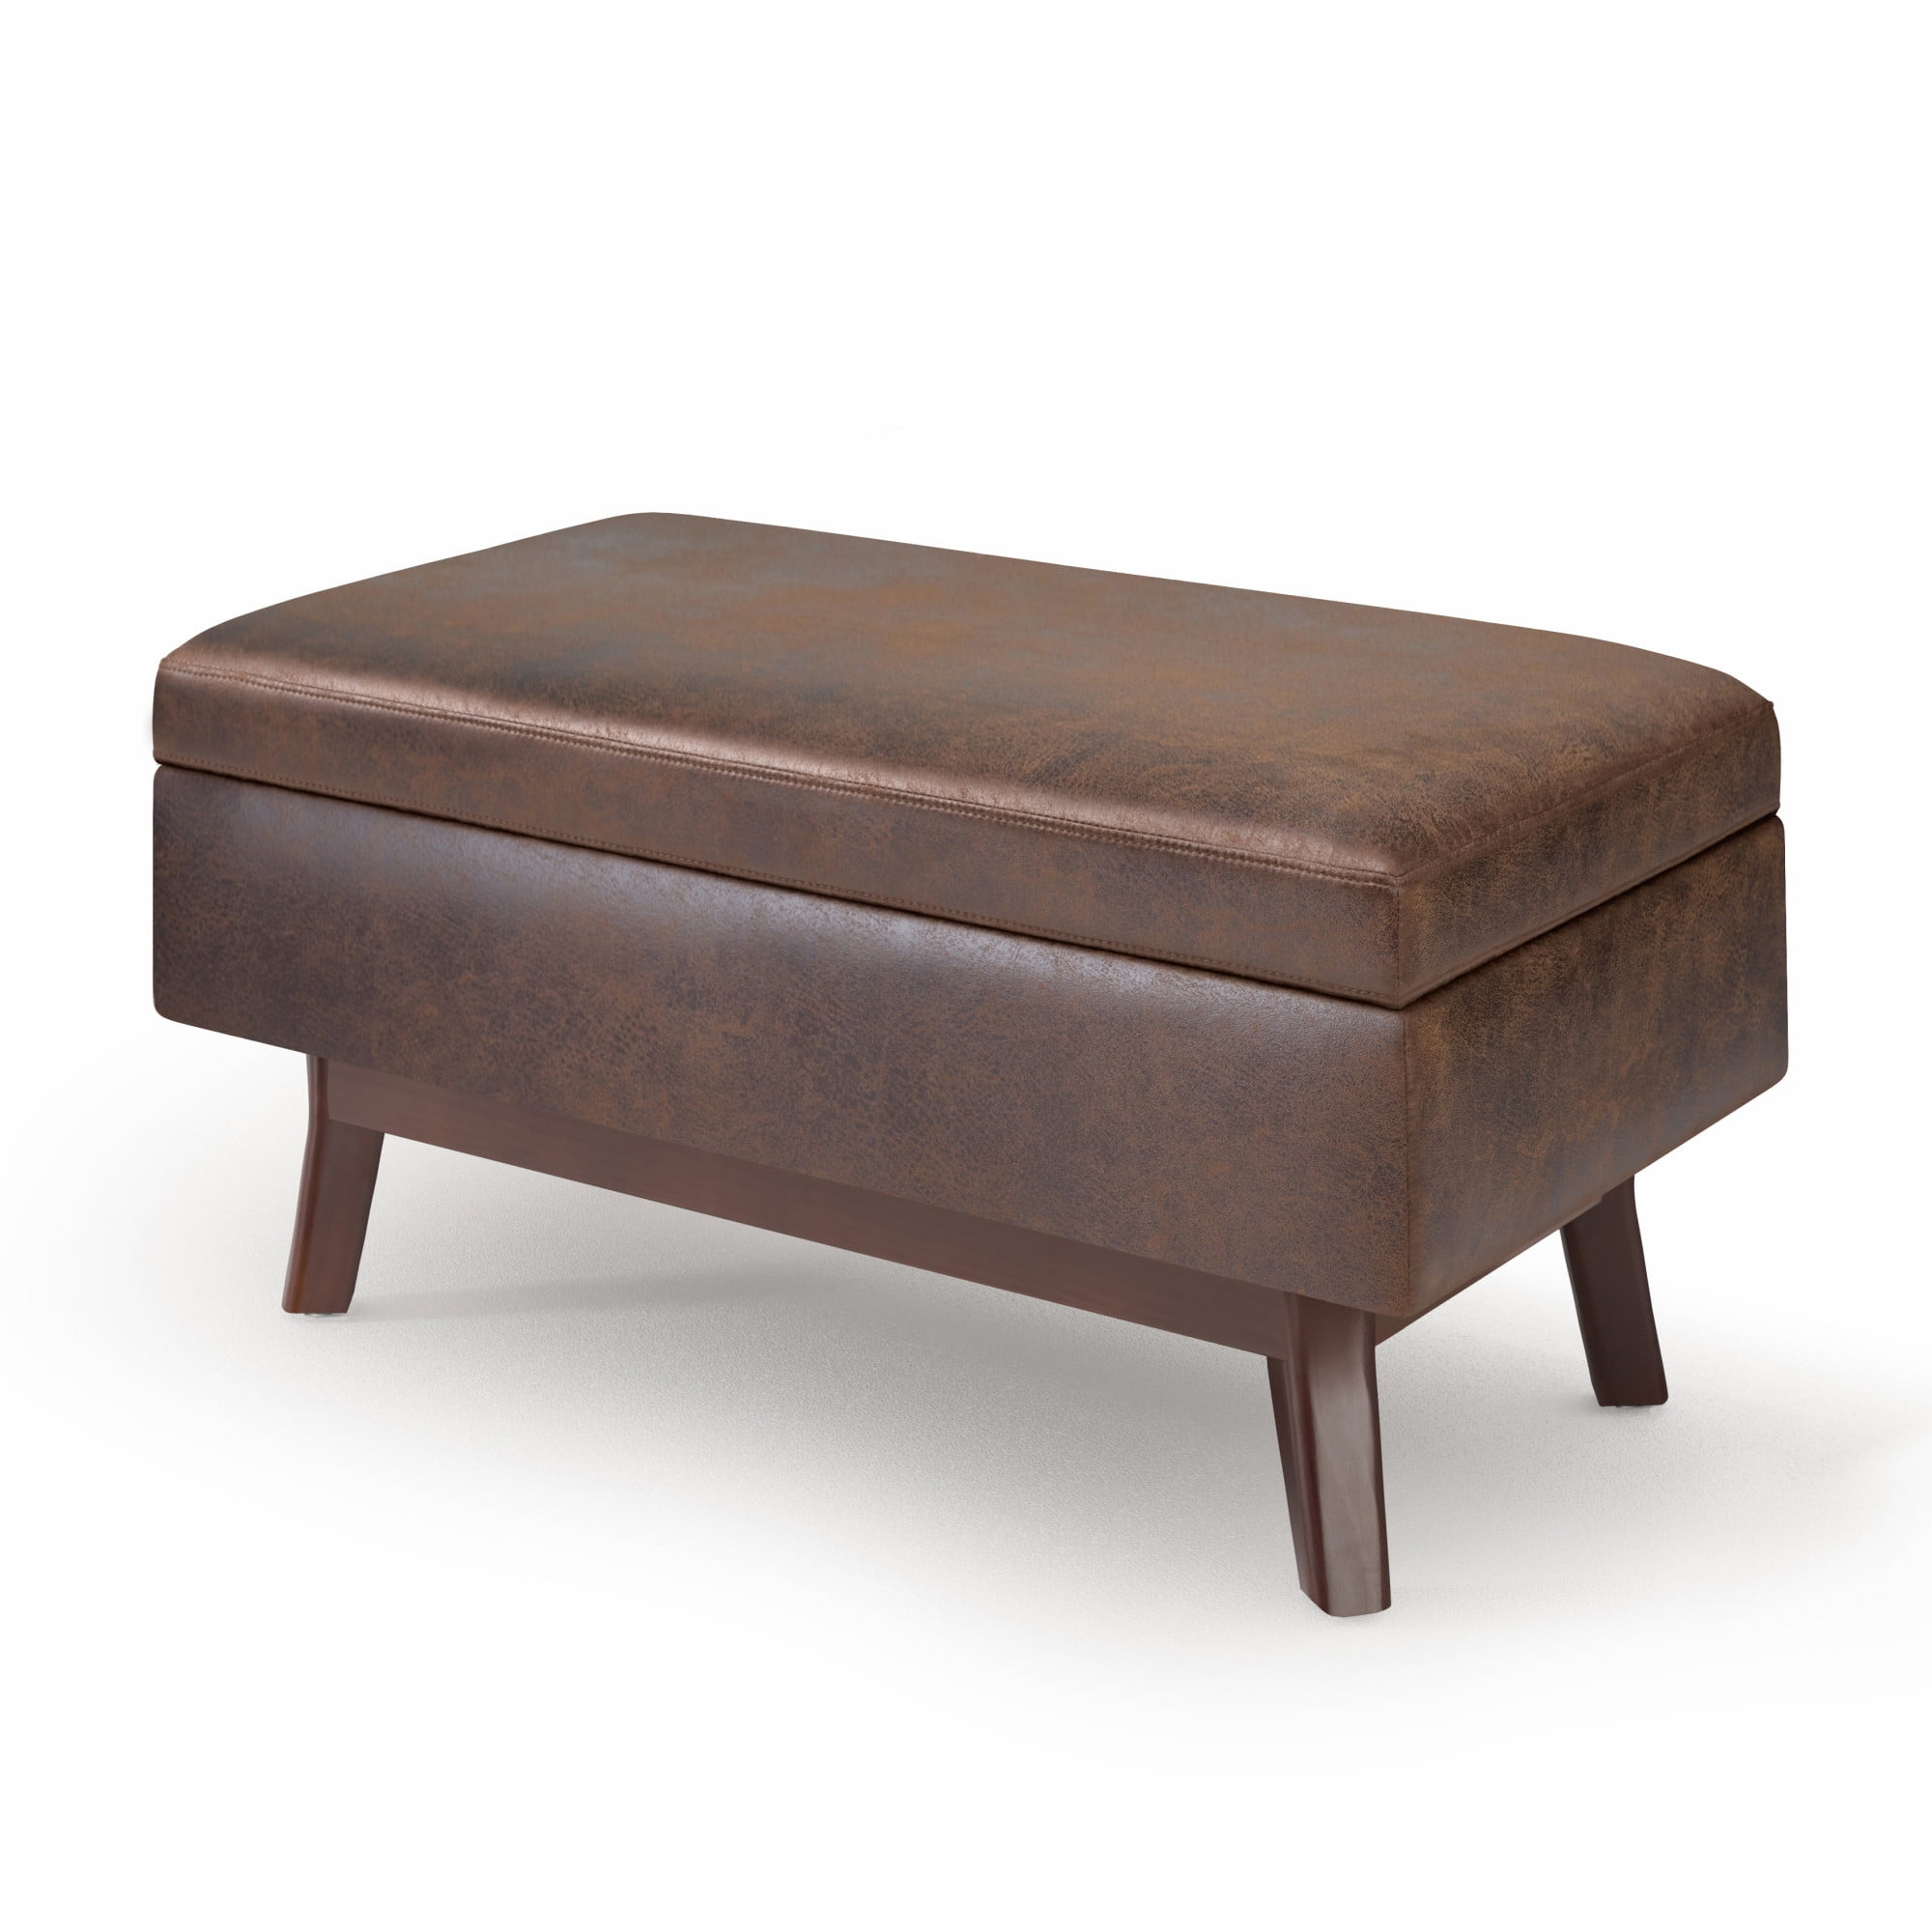 Chestnut /dark brown Fabric Footstool storage box/ottoman Large 